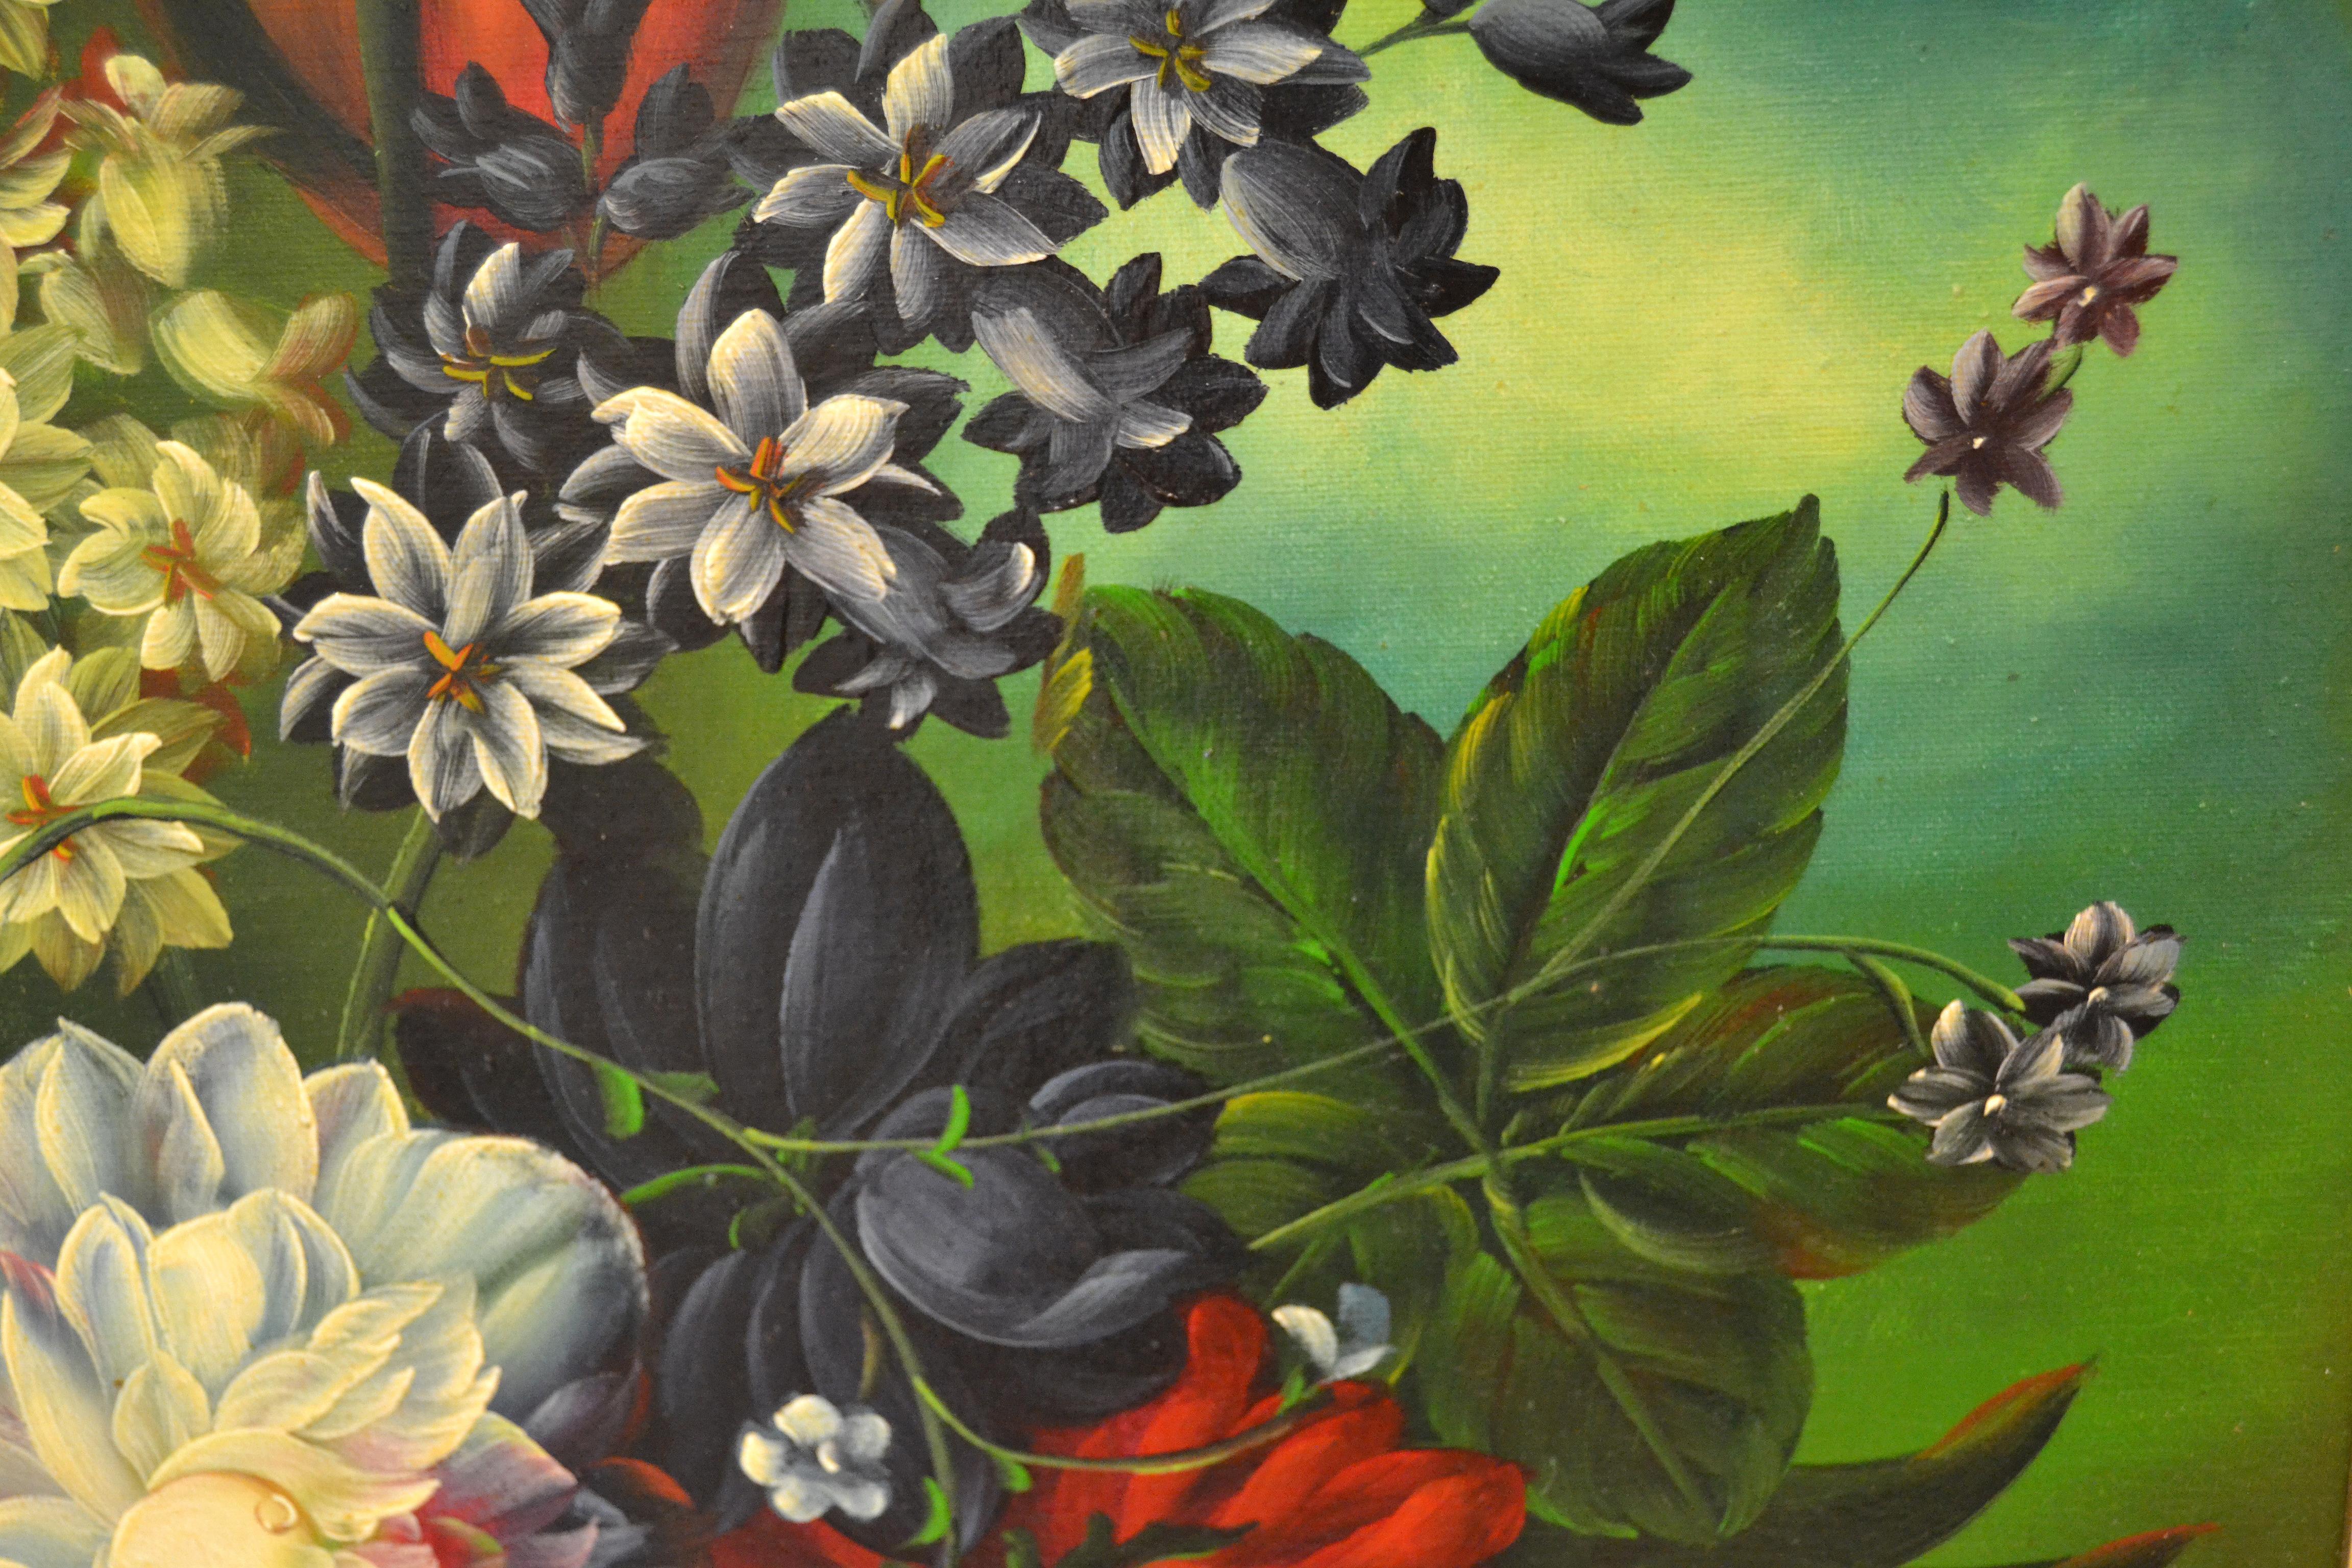 American Ornate Gilt Framed Oil Painting Floral Bouquet Still Life Signed James Moran For Sale